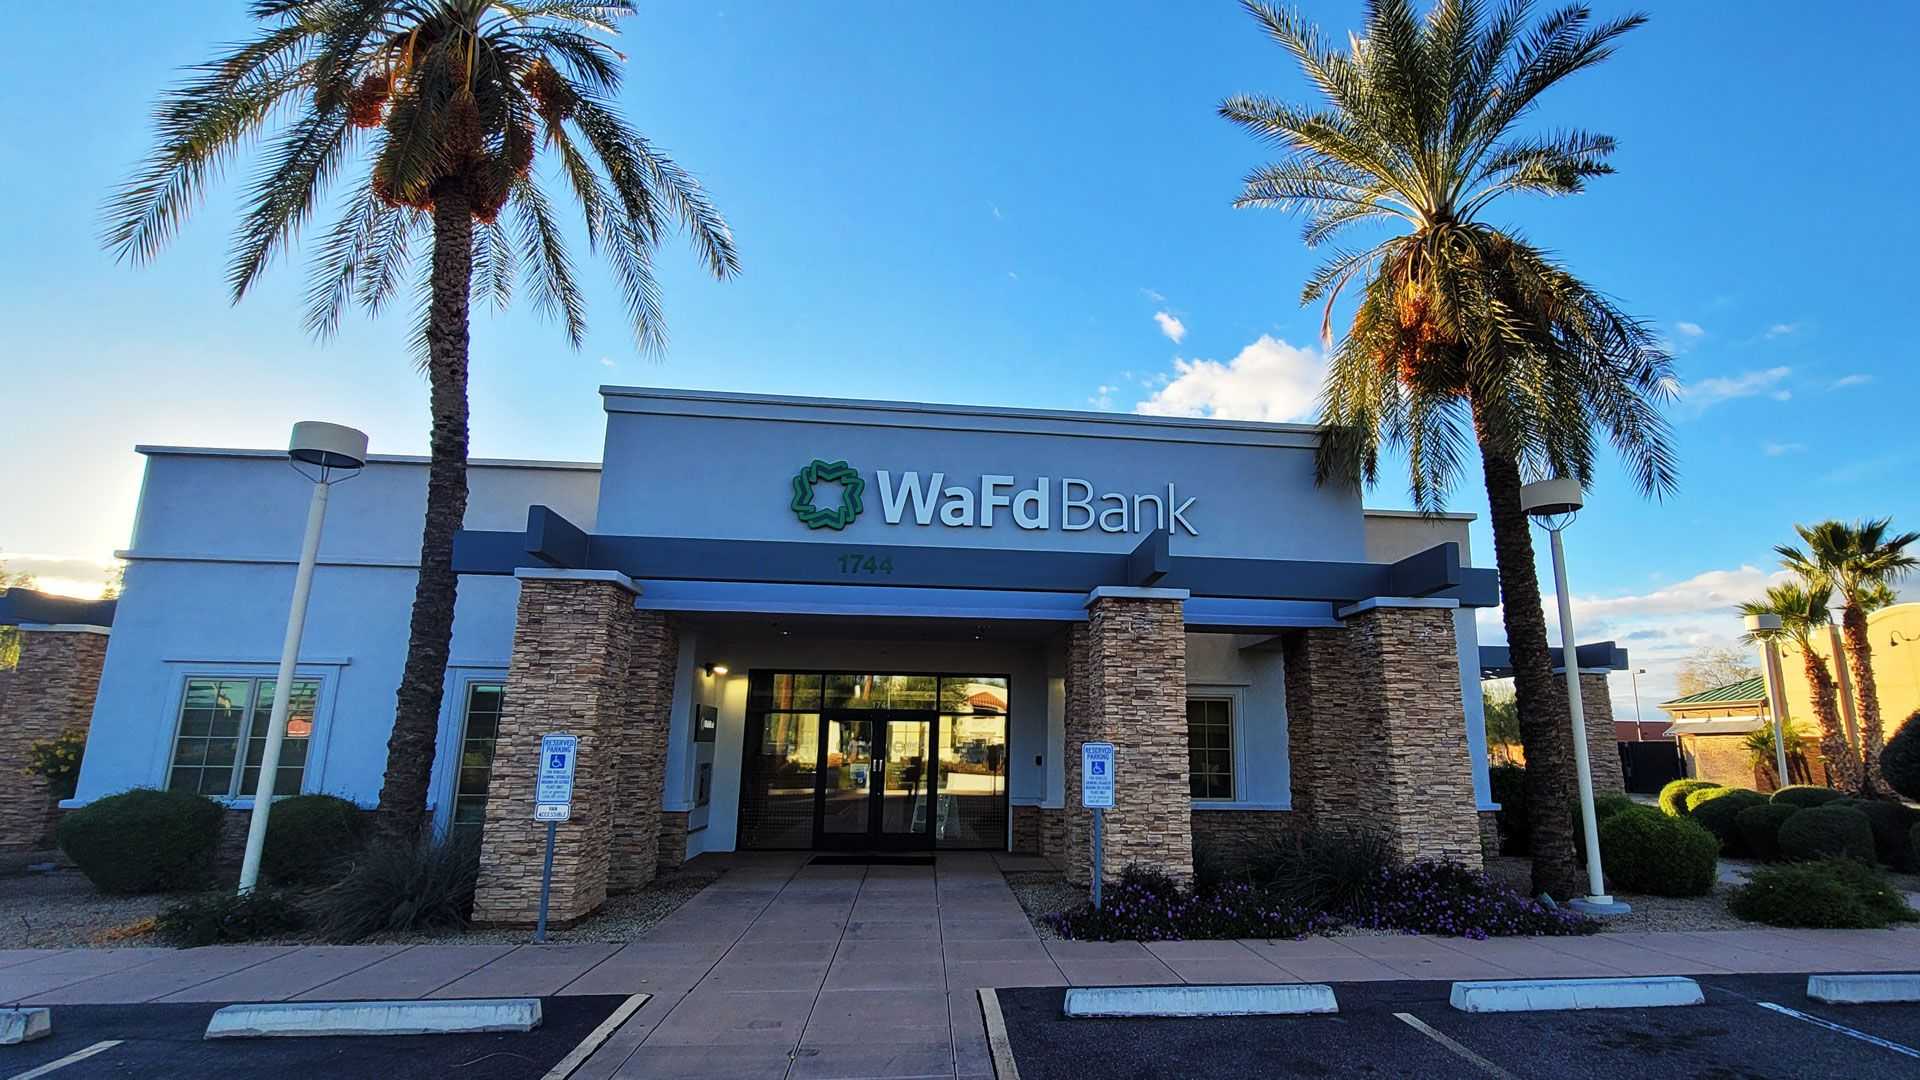 WaFd Bank in Goodyear, Arizona #1147 - Washington Federal.